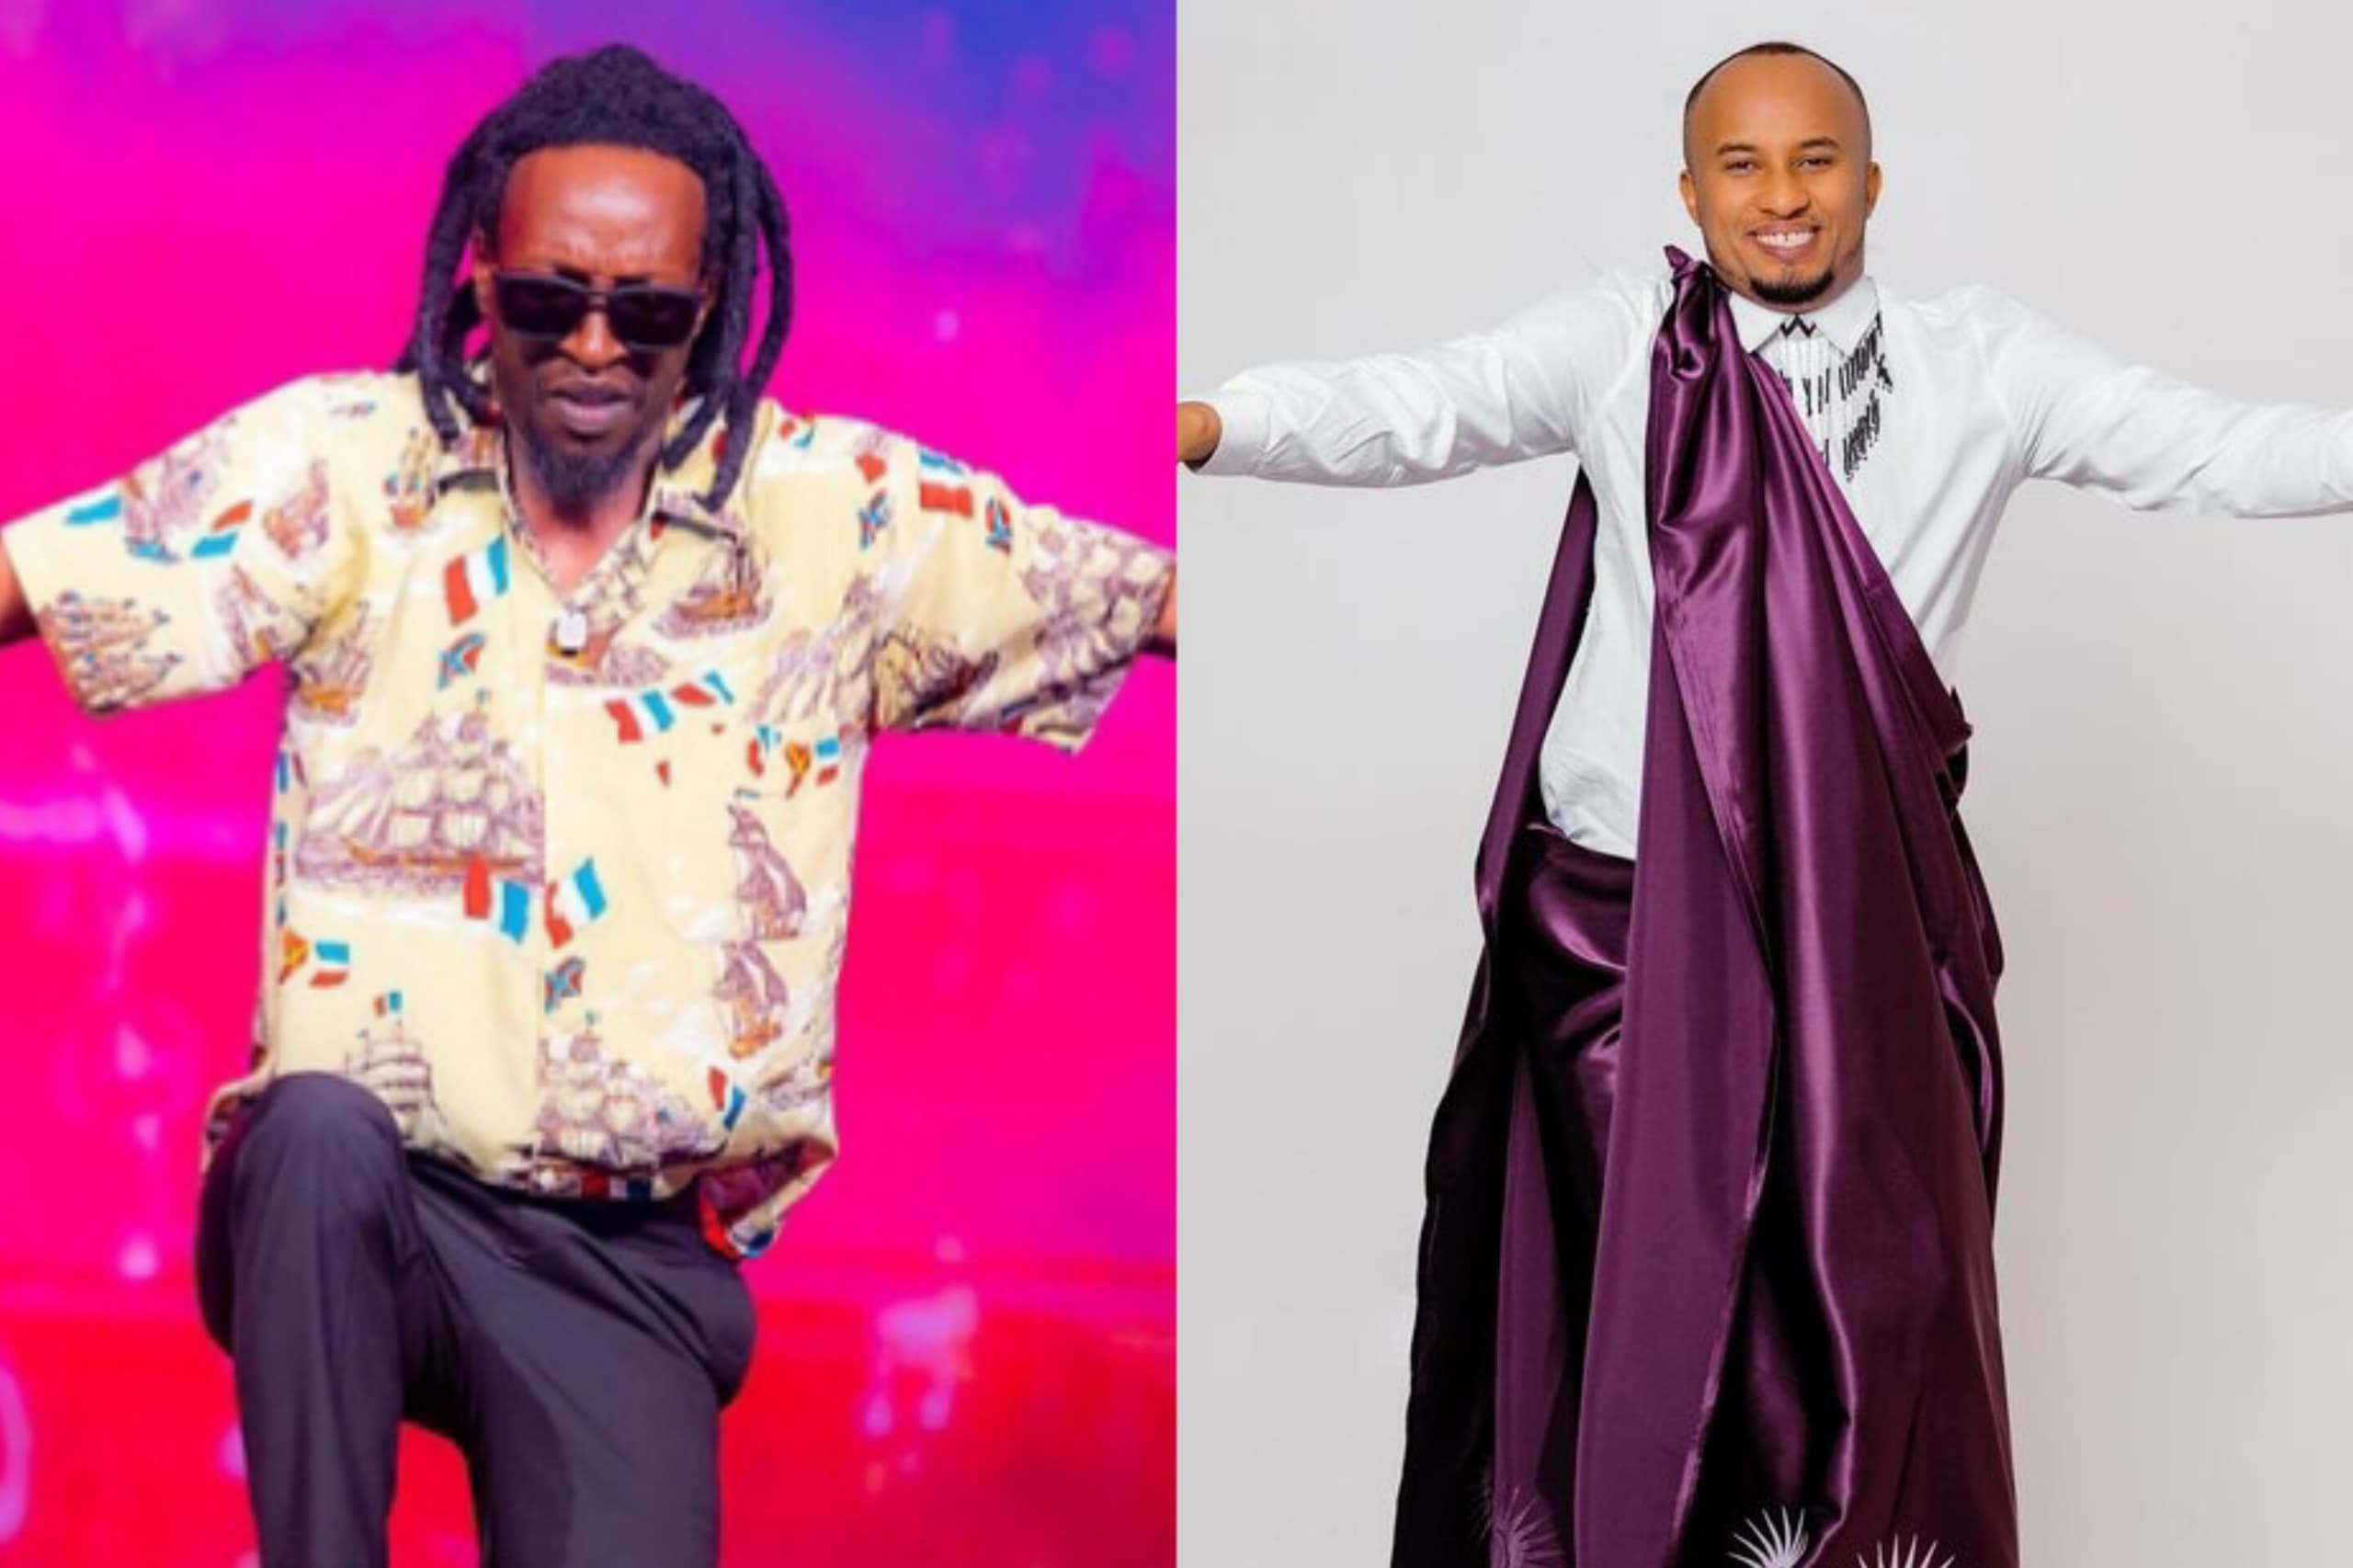 Migabo Live Concert: Cyusa Ibrahim Unites with Ruti Joël for a Cultural Showcase